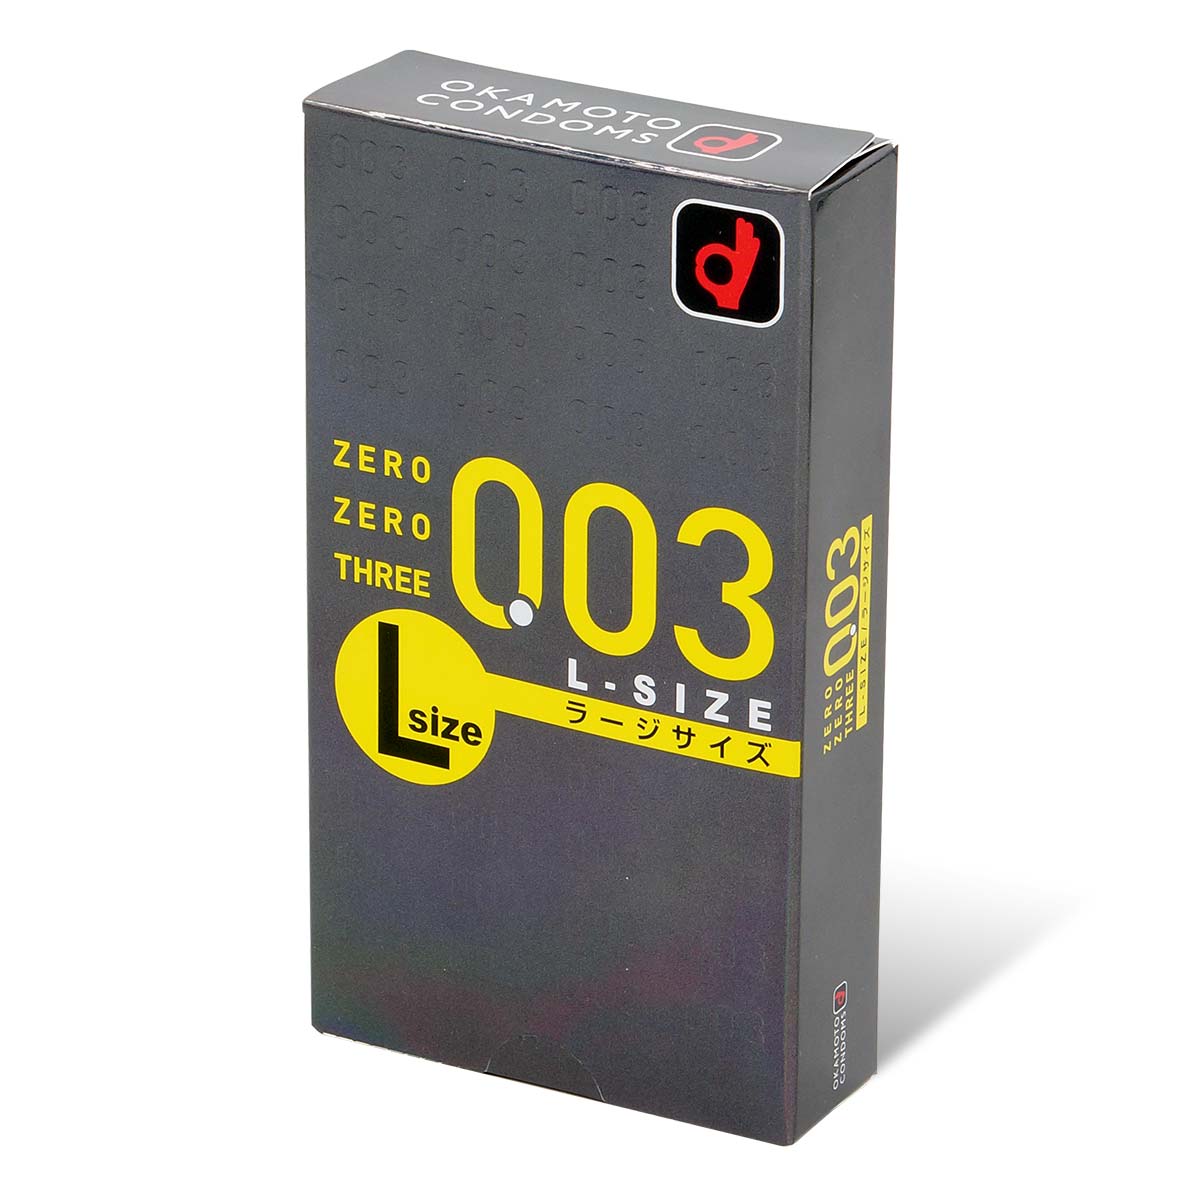 Zero Zero Three 0.03 L-size (Japan Edition) 58mm 10's Pack Latex Condom-p_1